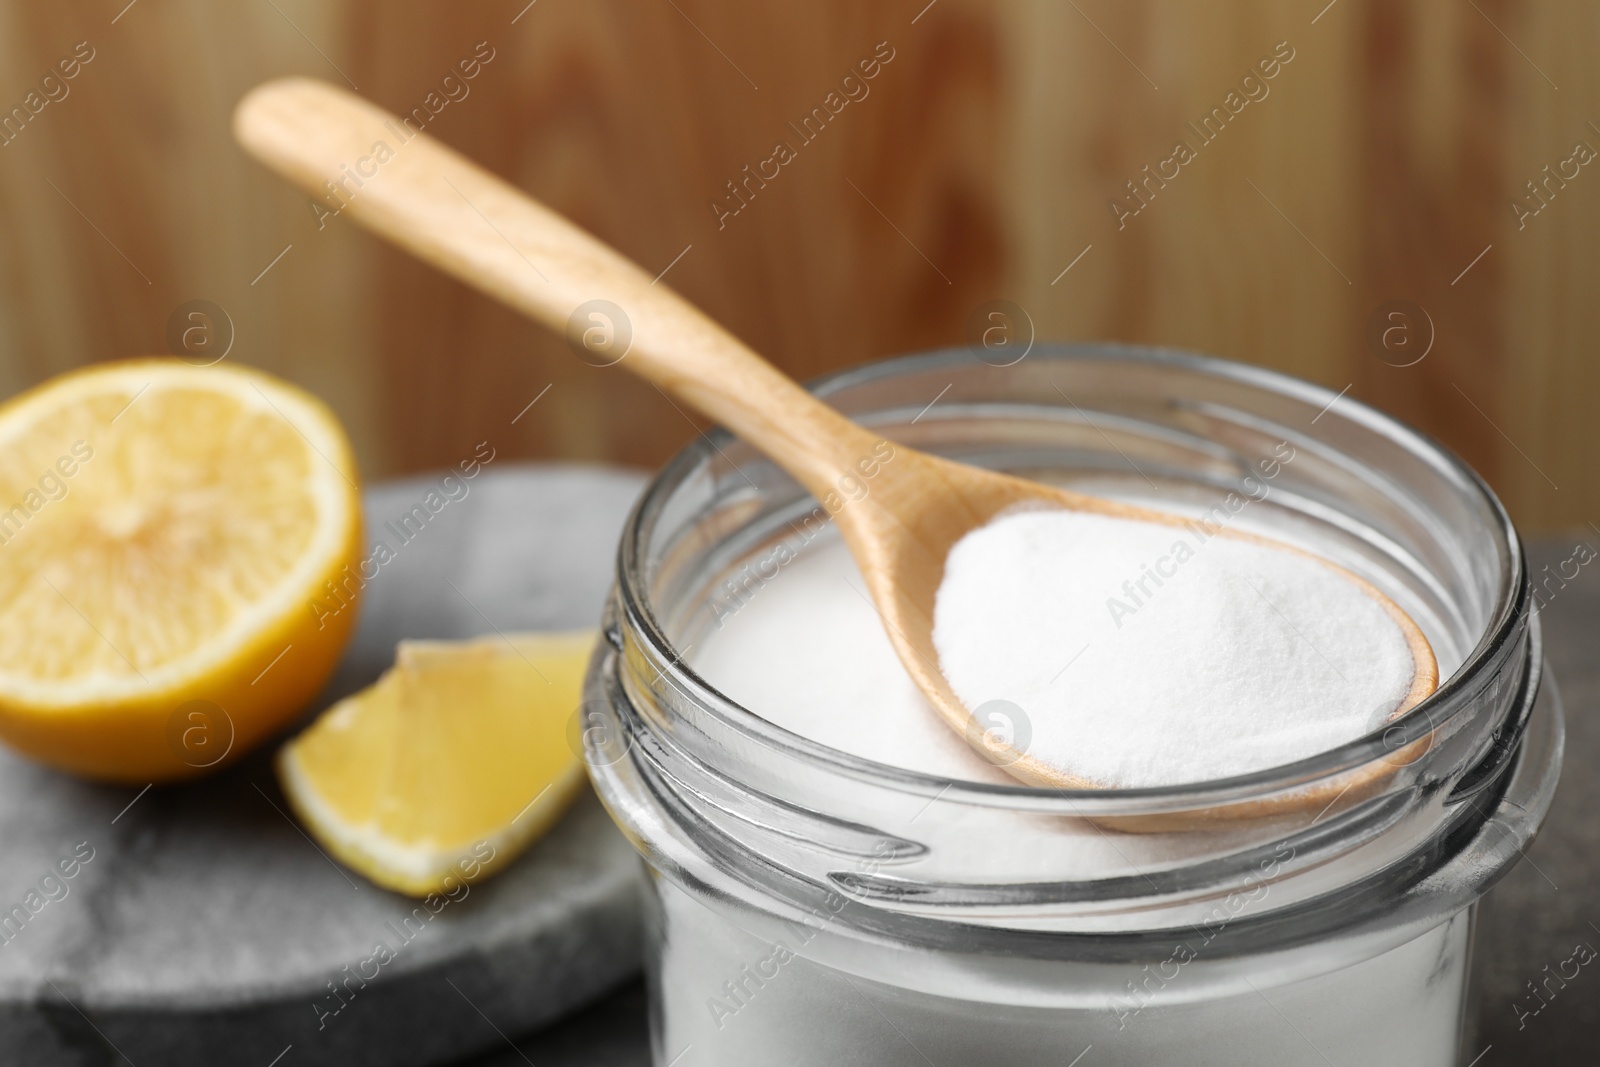 Photo of Baking soda, spoon and lemon on table, closeup